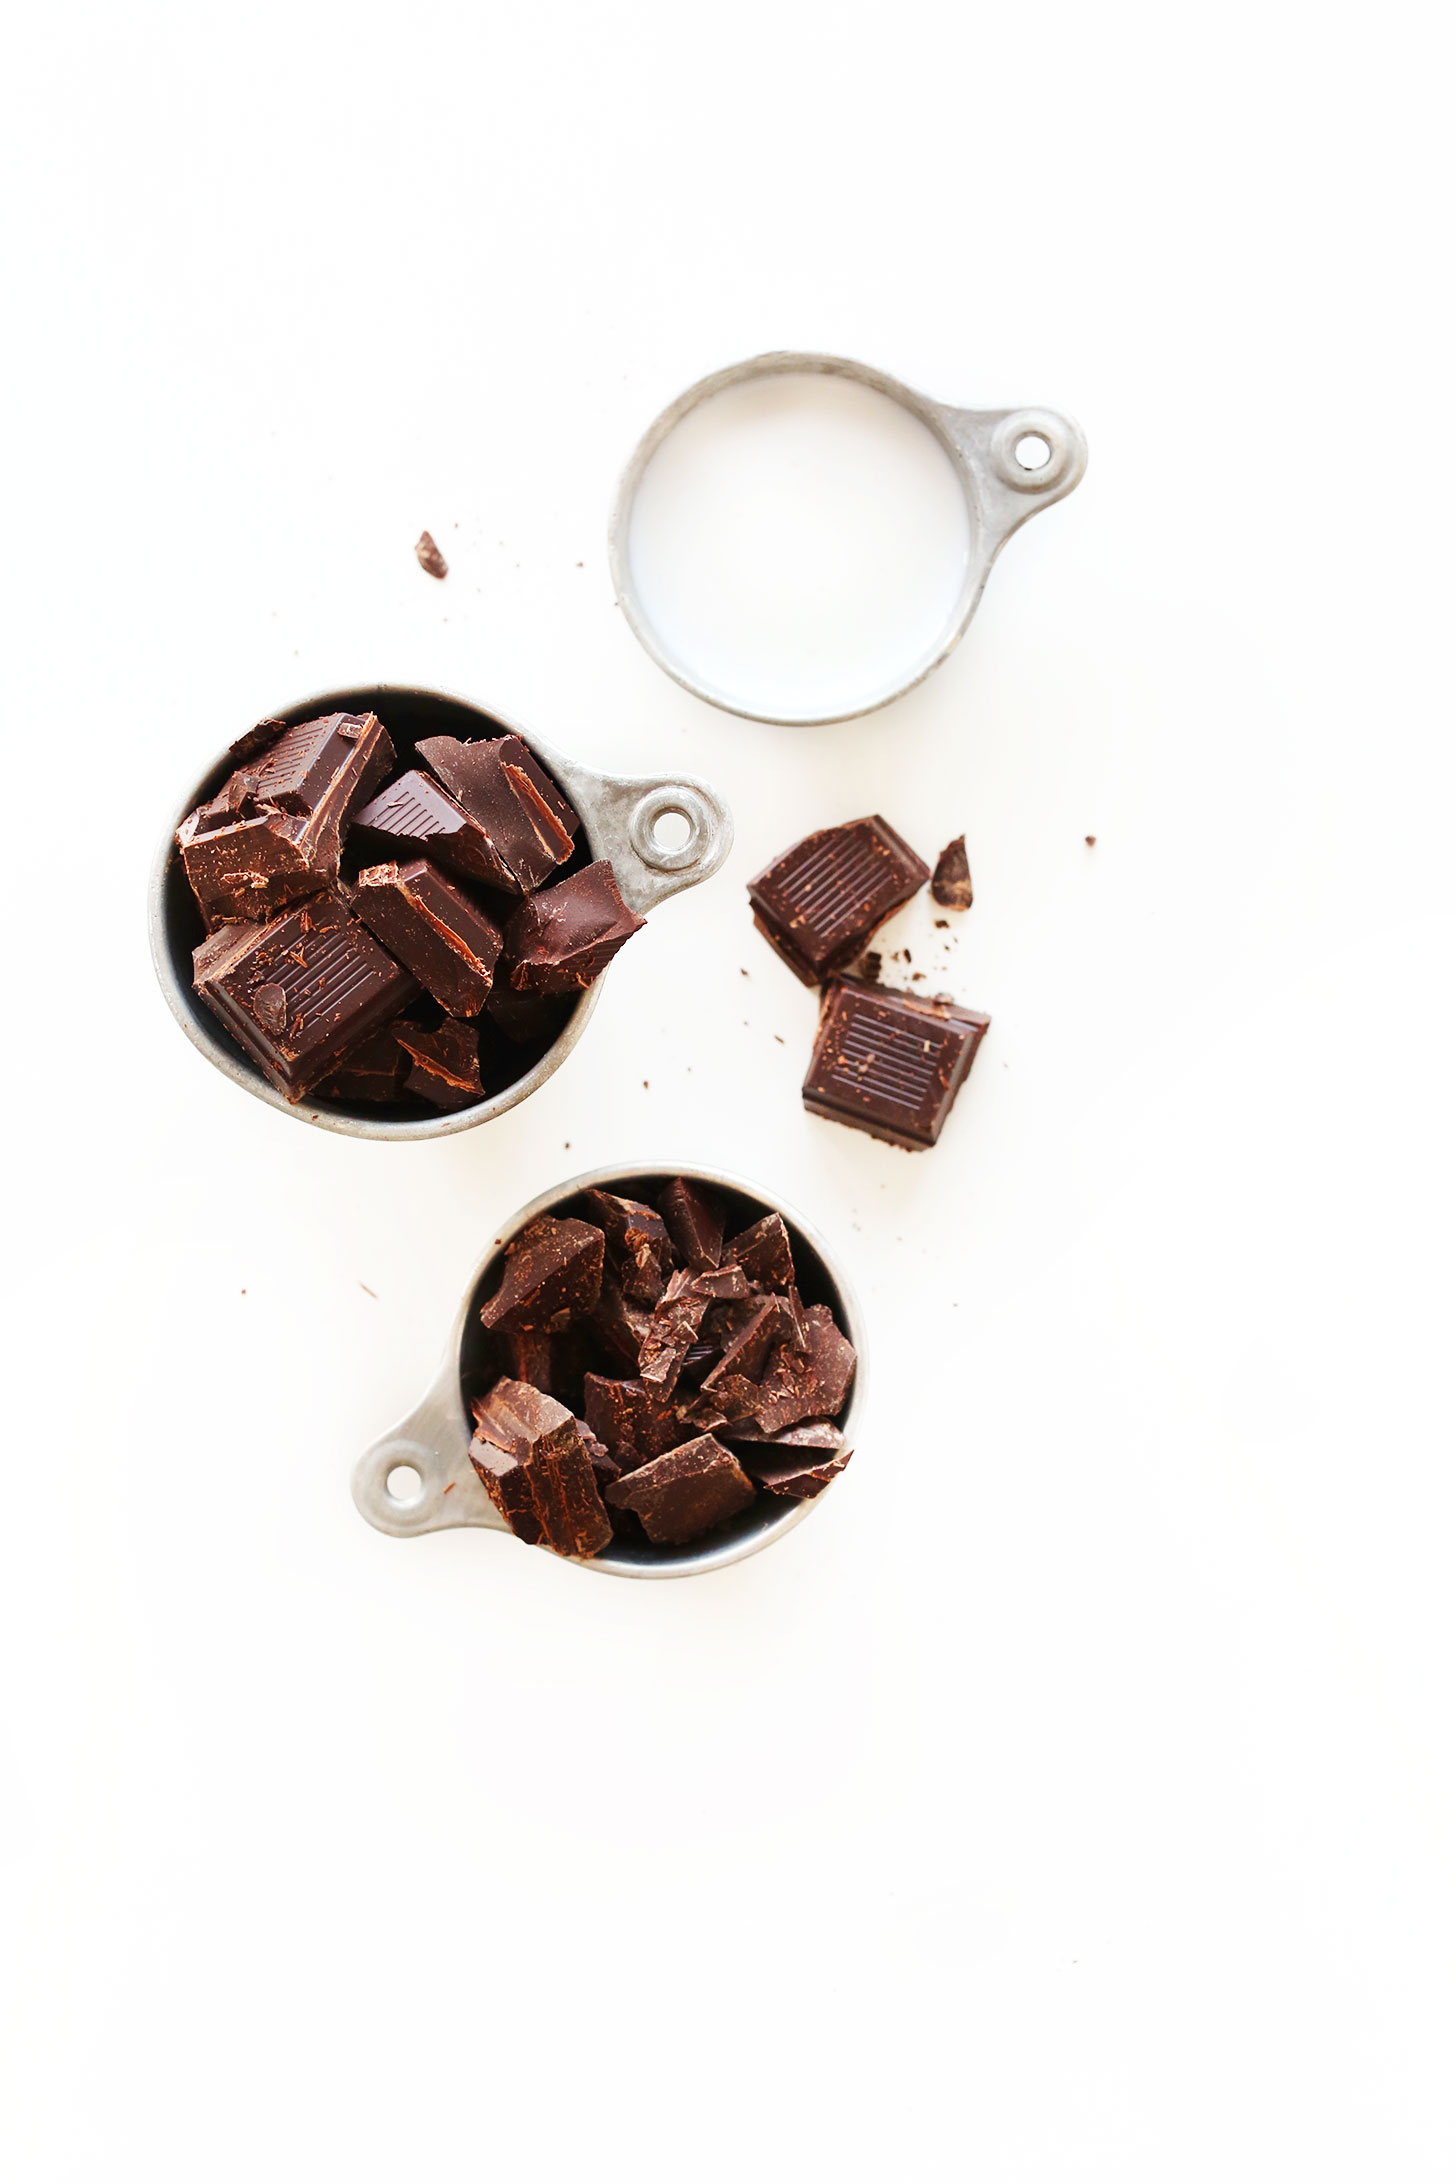 Measuring cups of dark chocolate and coconut milk for making super simple vegan Dark Chocolate Truffles